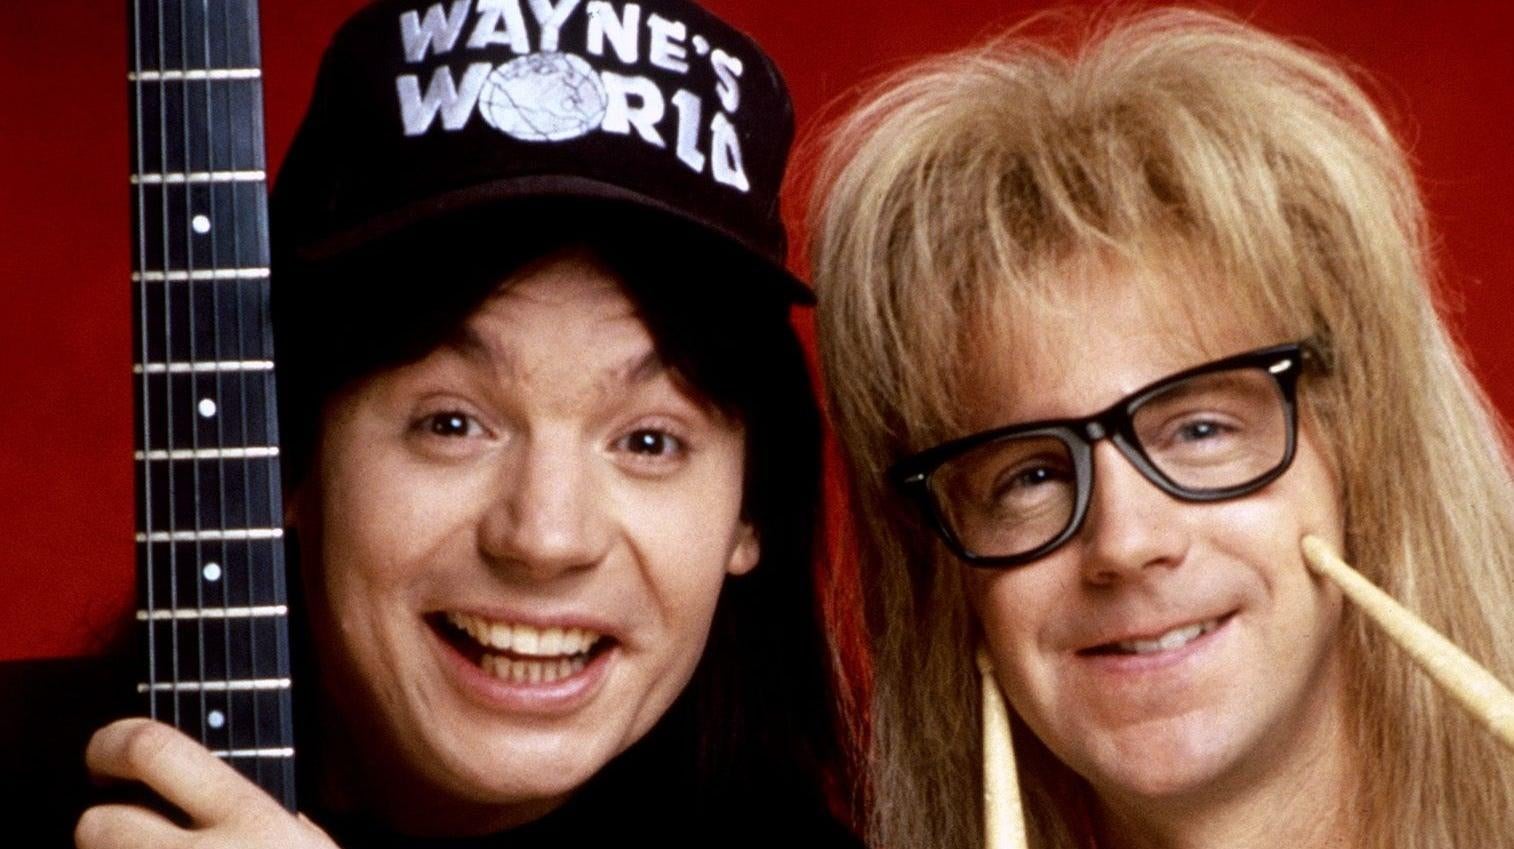 Mike Myers and Dana Carvey in Wayne's World. (Image: Paramount)